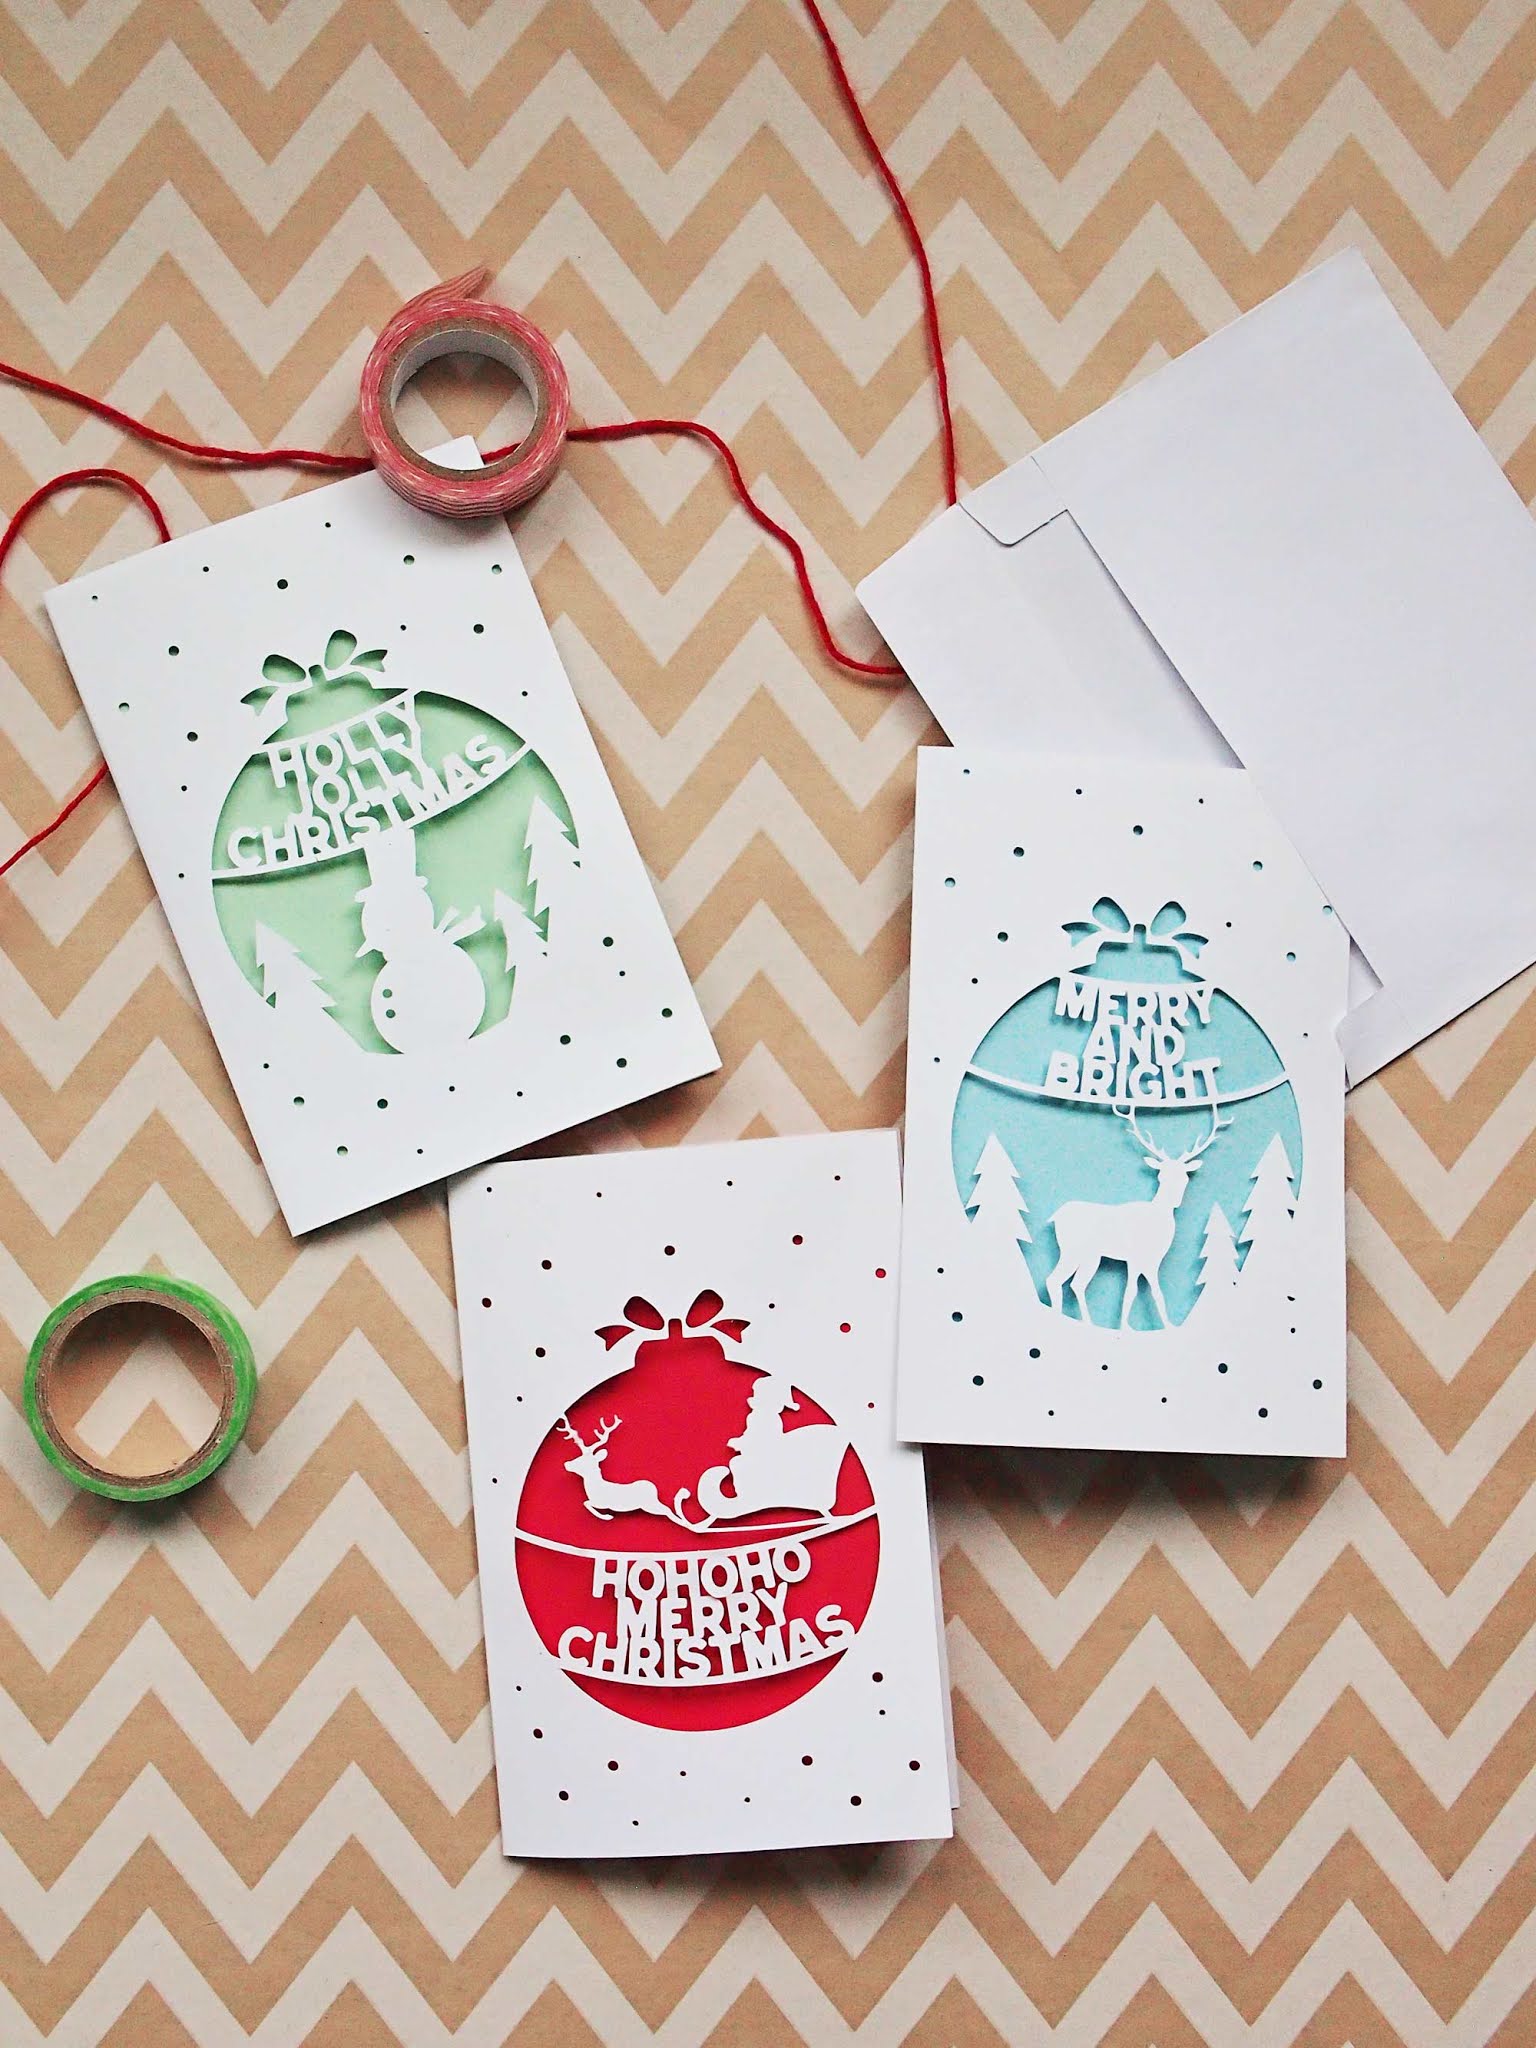 Handmade Paper Cutout Holiday Cards - DIY gift ideas